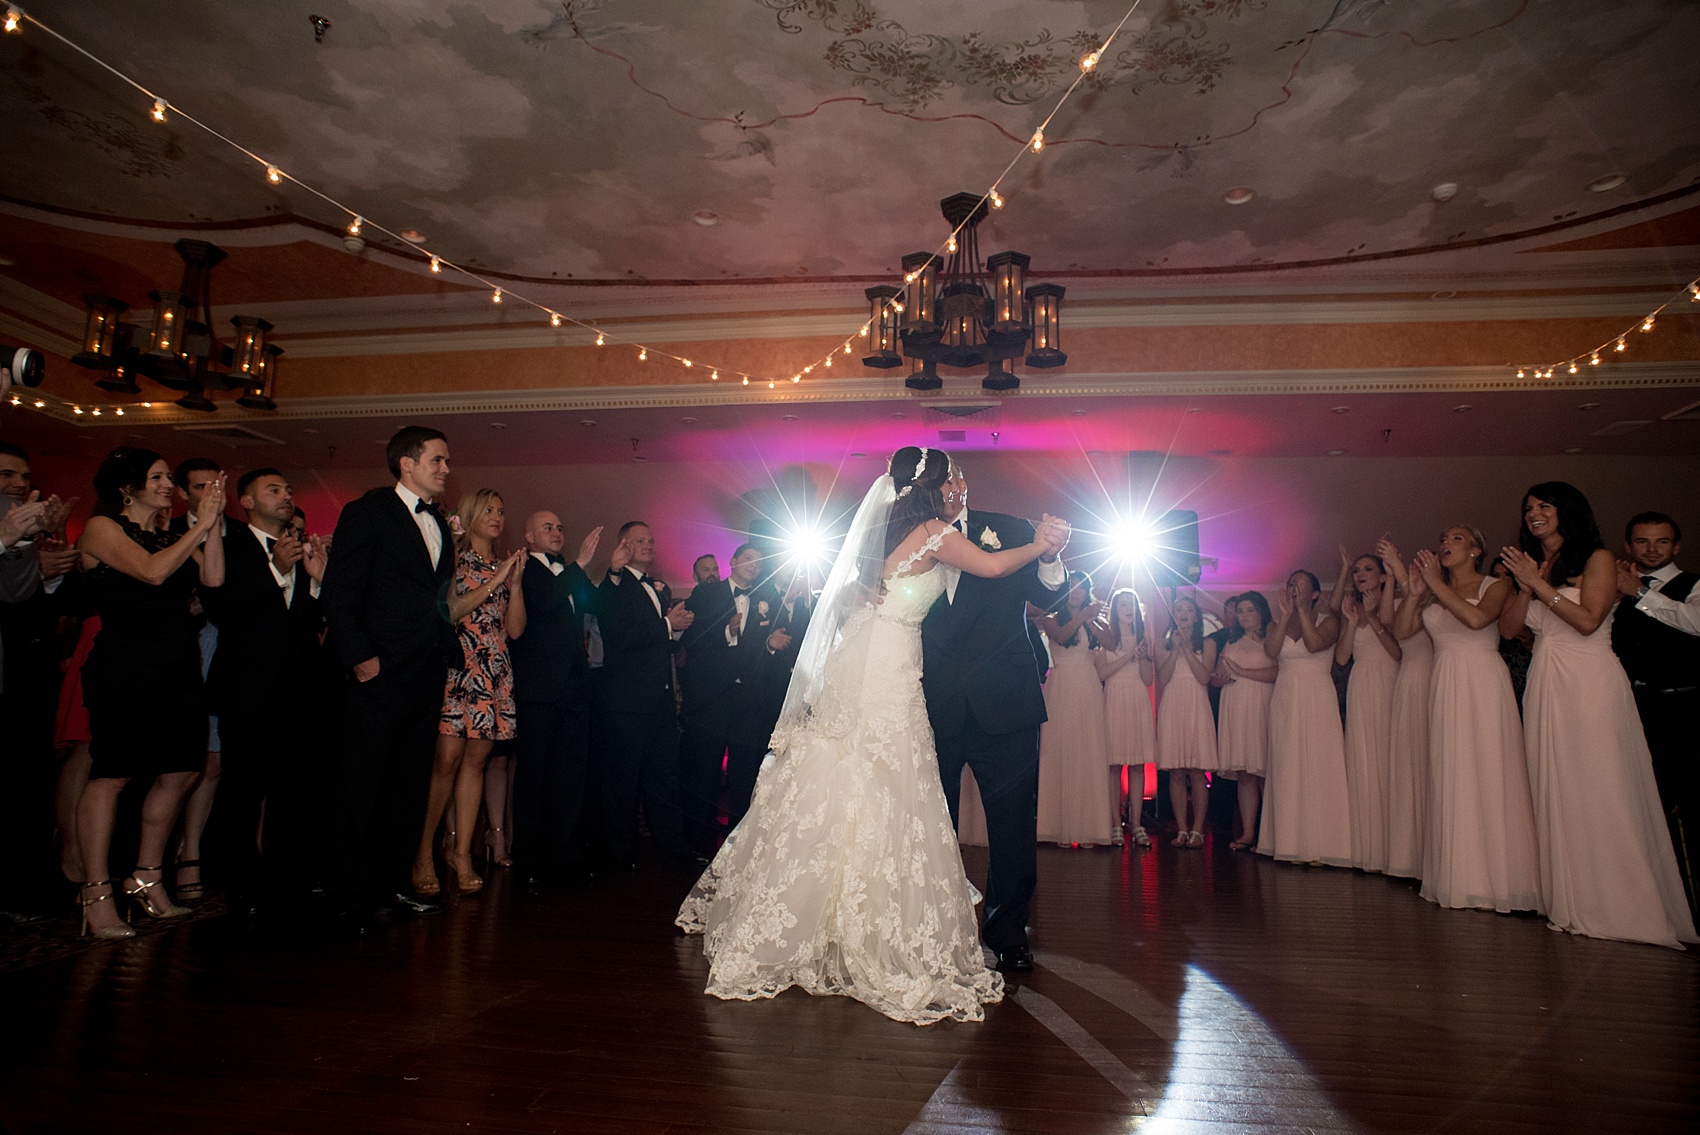 Skylands Manor spring wedding reception. Images by Mikkel Paige Photography, NJ wedding photographer.